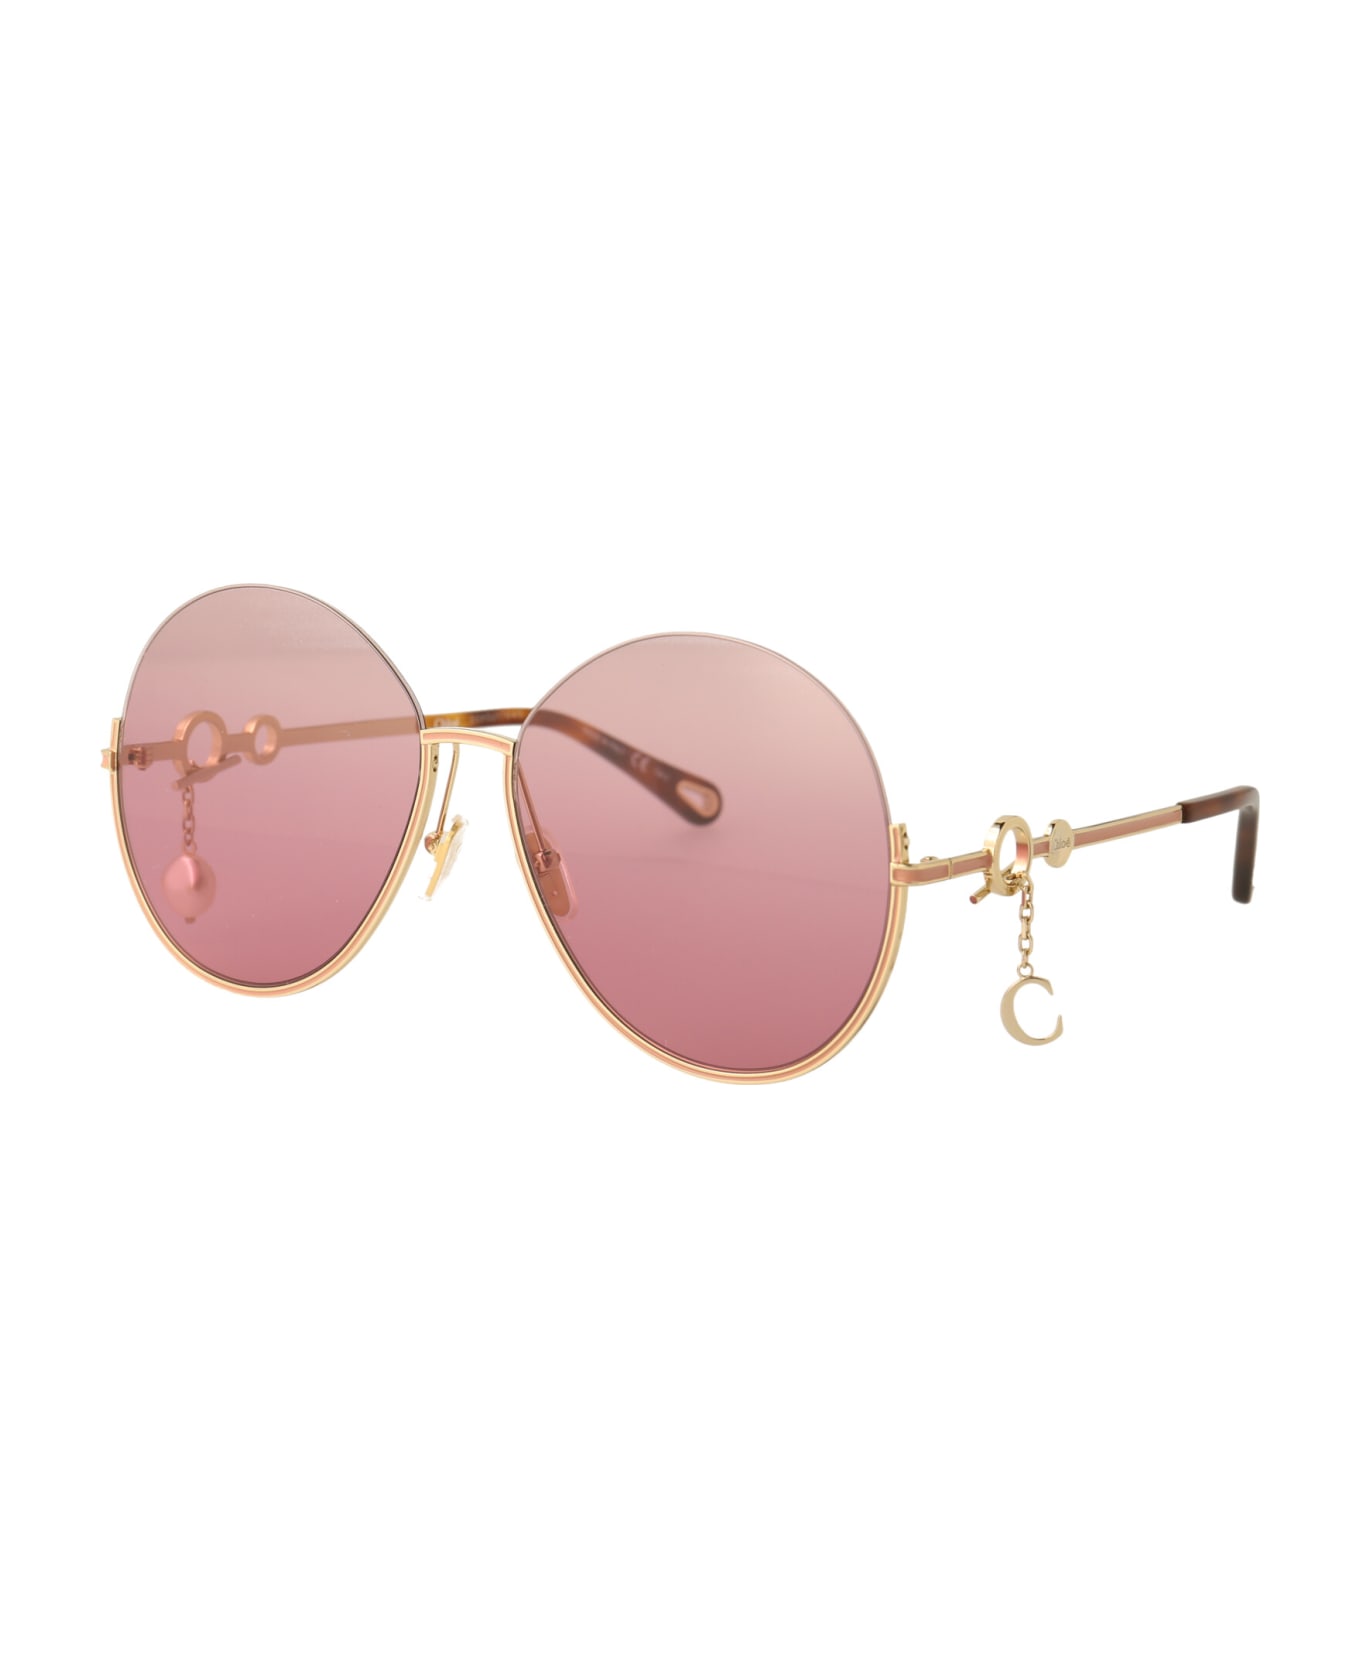 Chloé Eyewear Ch0067s Sunglasses - 004 GOLD GOLD PINK